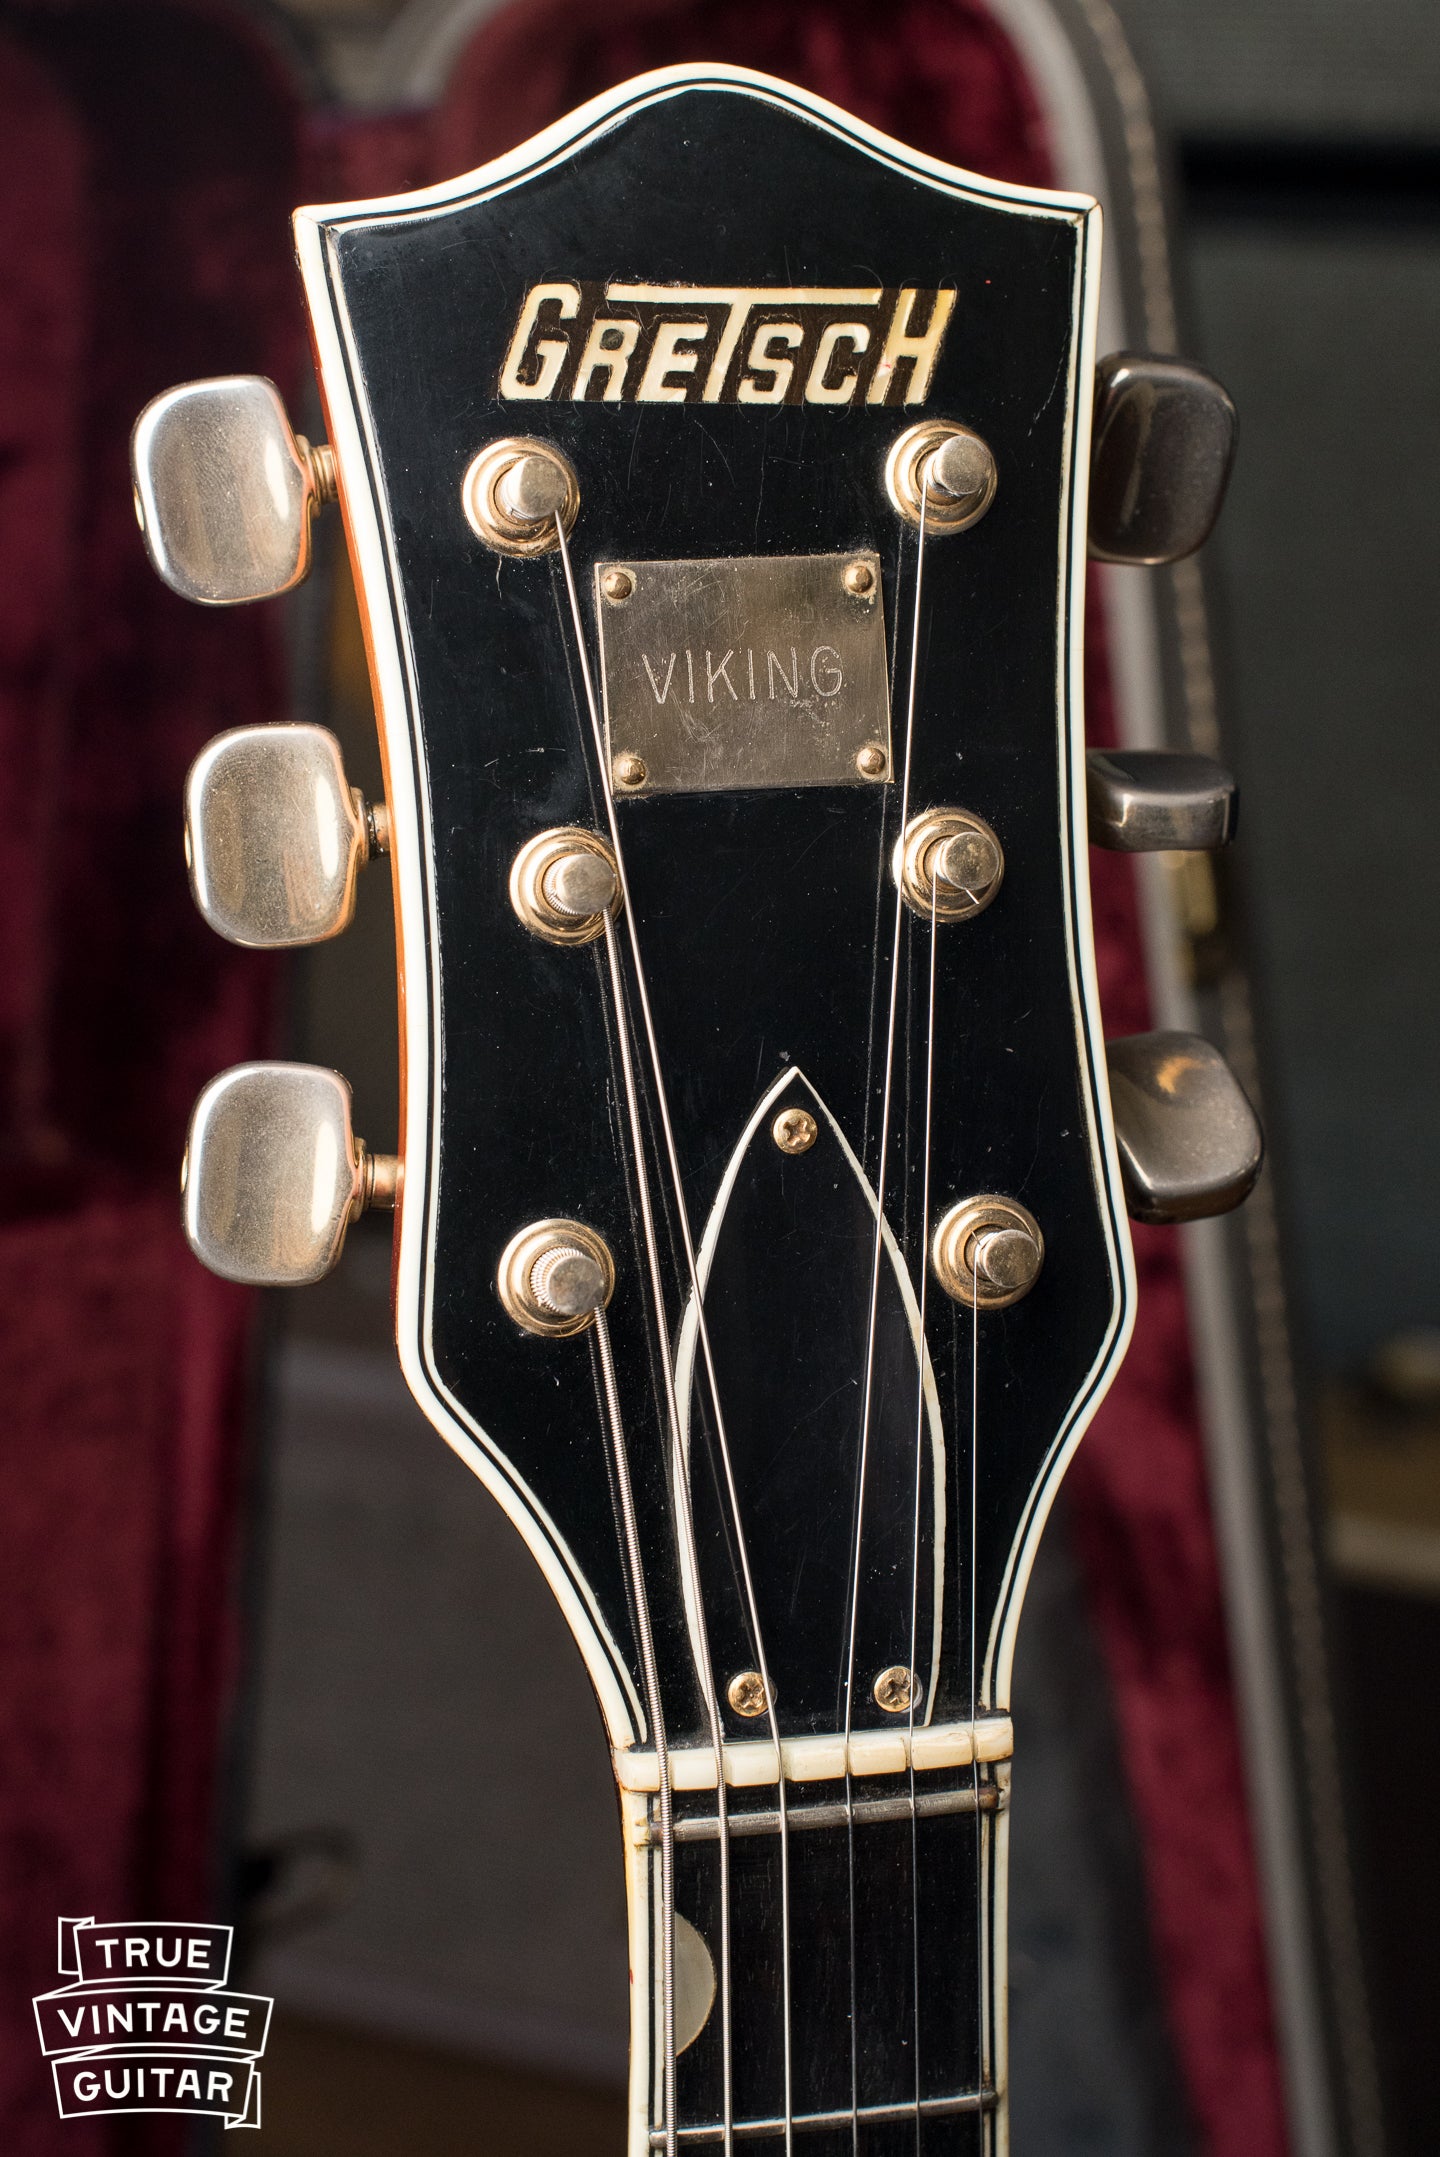 Headstock, Vintage 1967 Gretsch 6187 Viking electric guitar